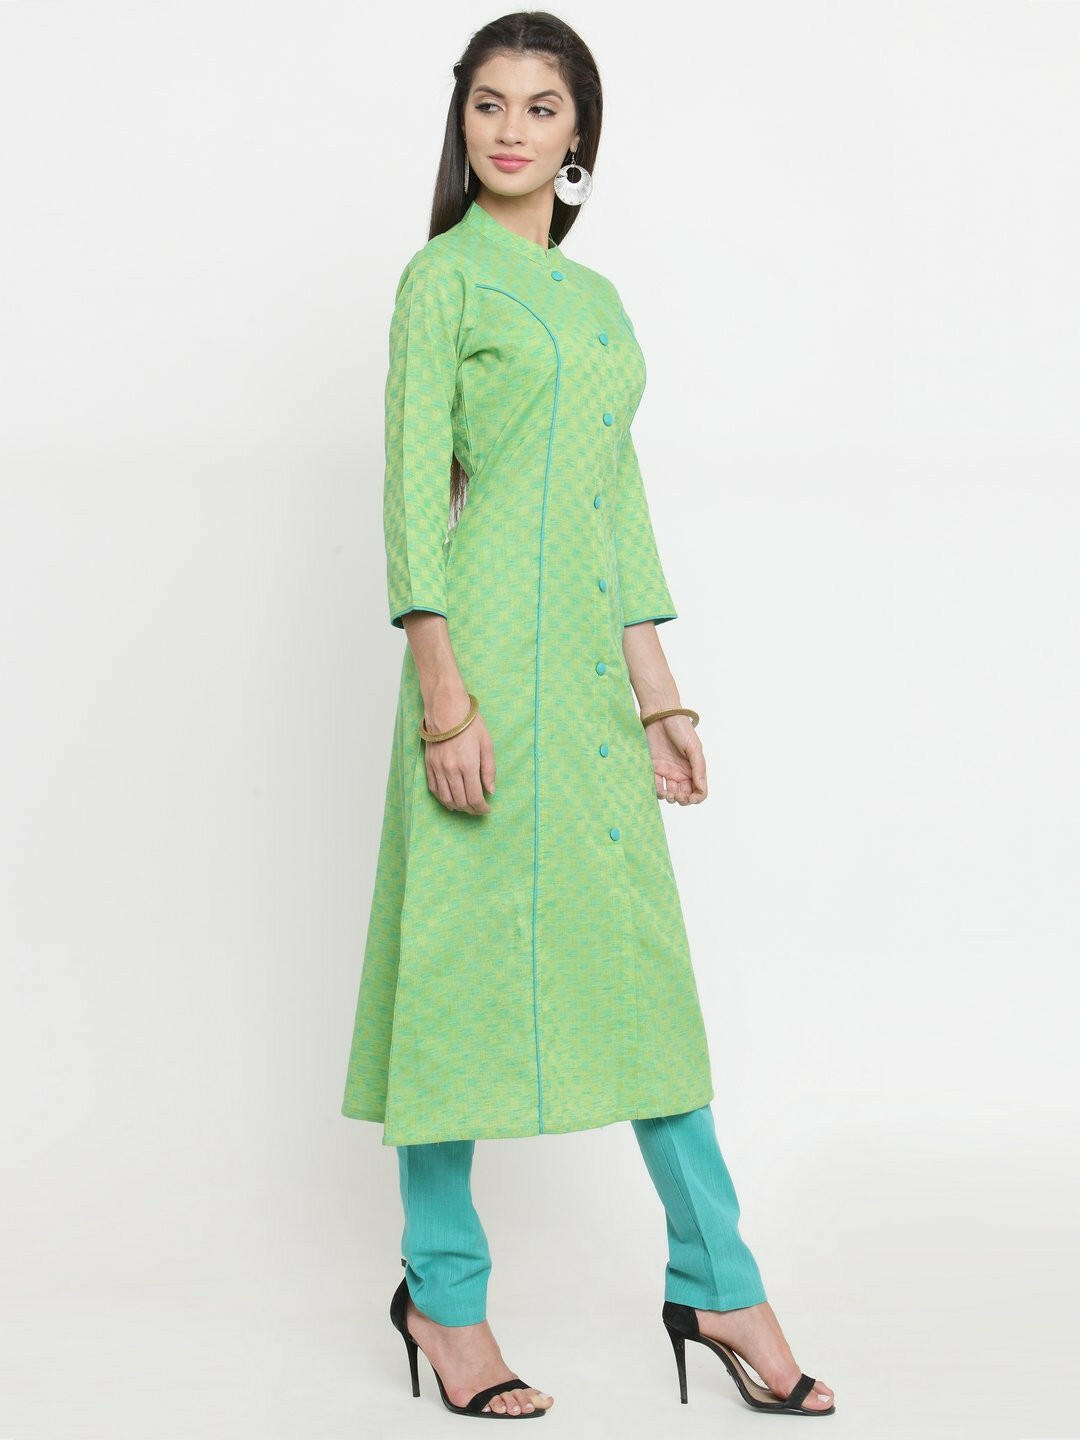 Green-Coloured, Woven Design A-Line Kurta - womensfashionfun